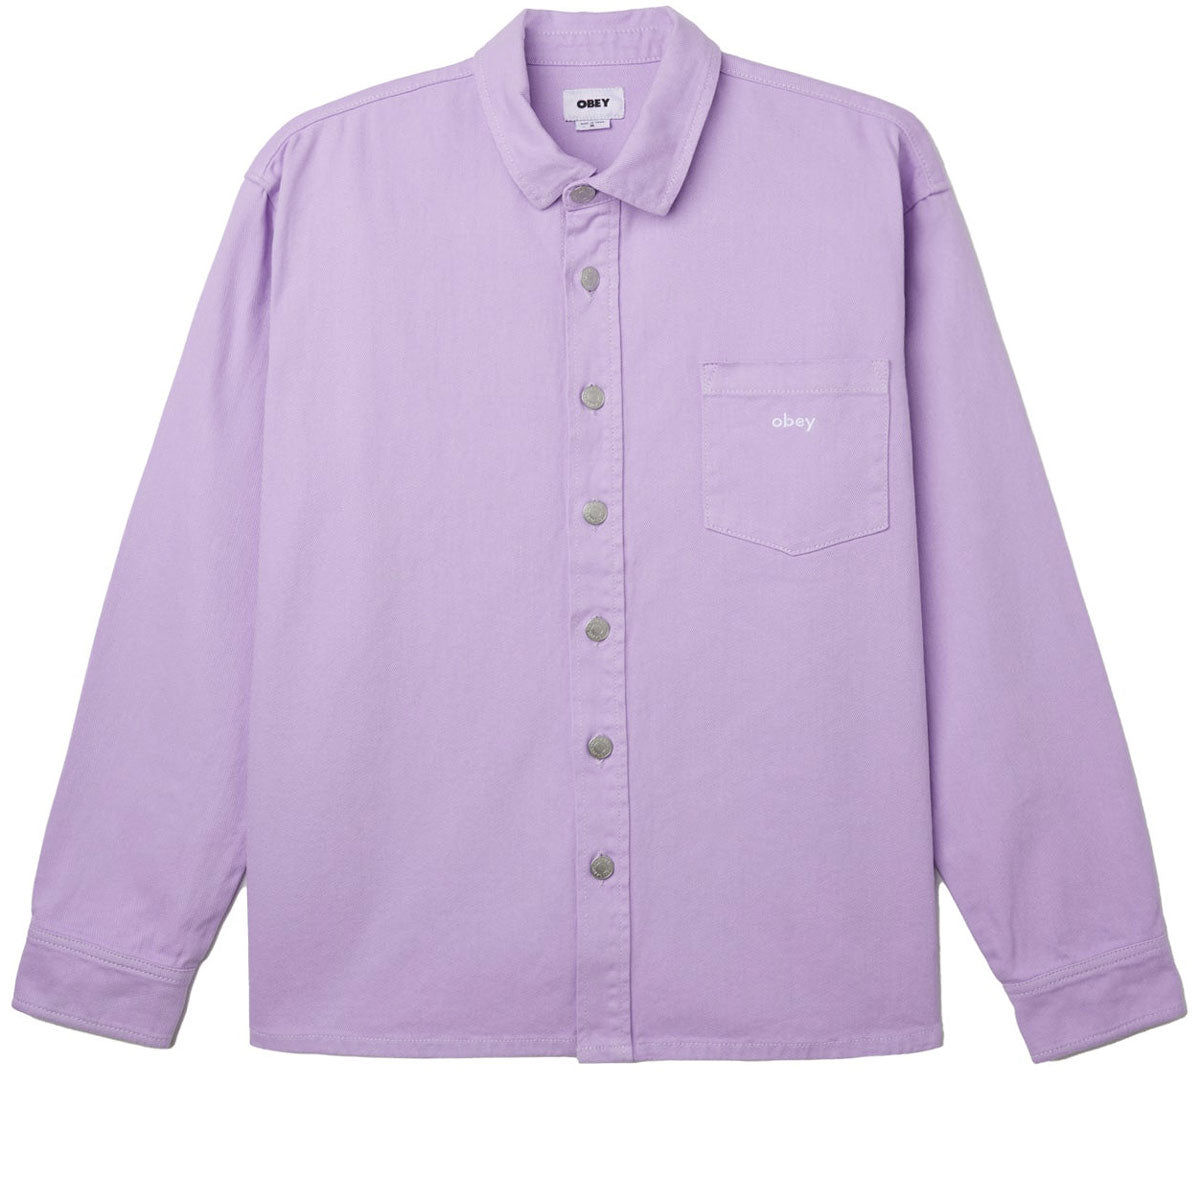 Obey Magnolia Long Sleeve Shirt - Purple Rose image 4